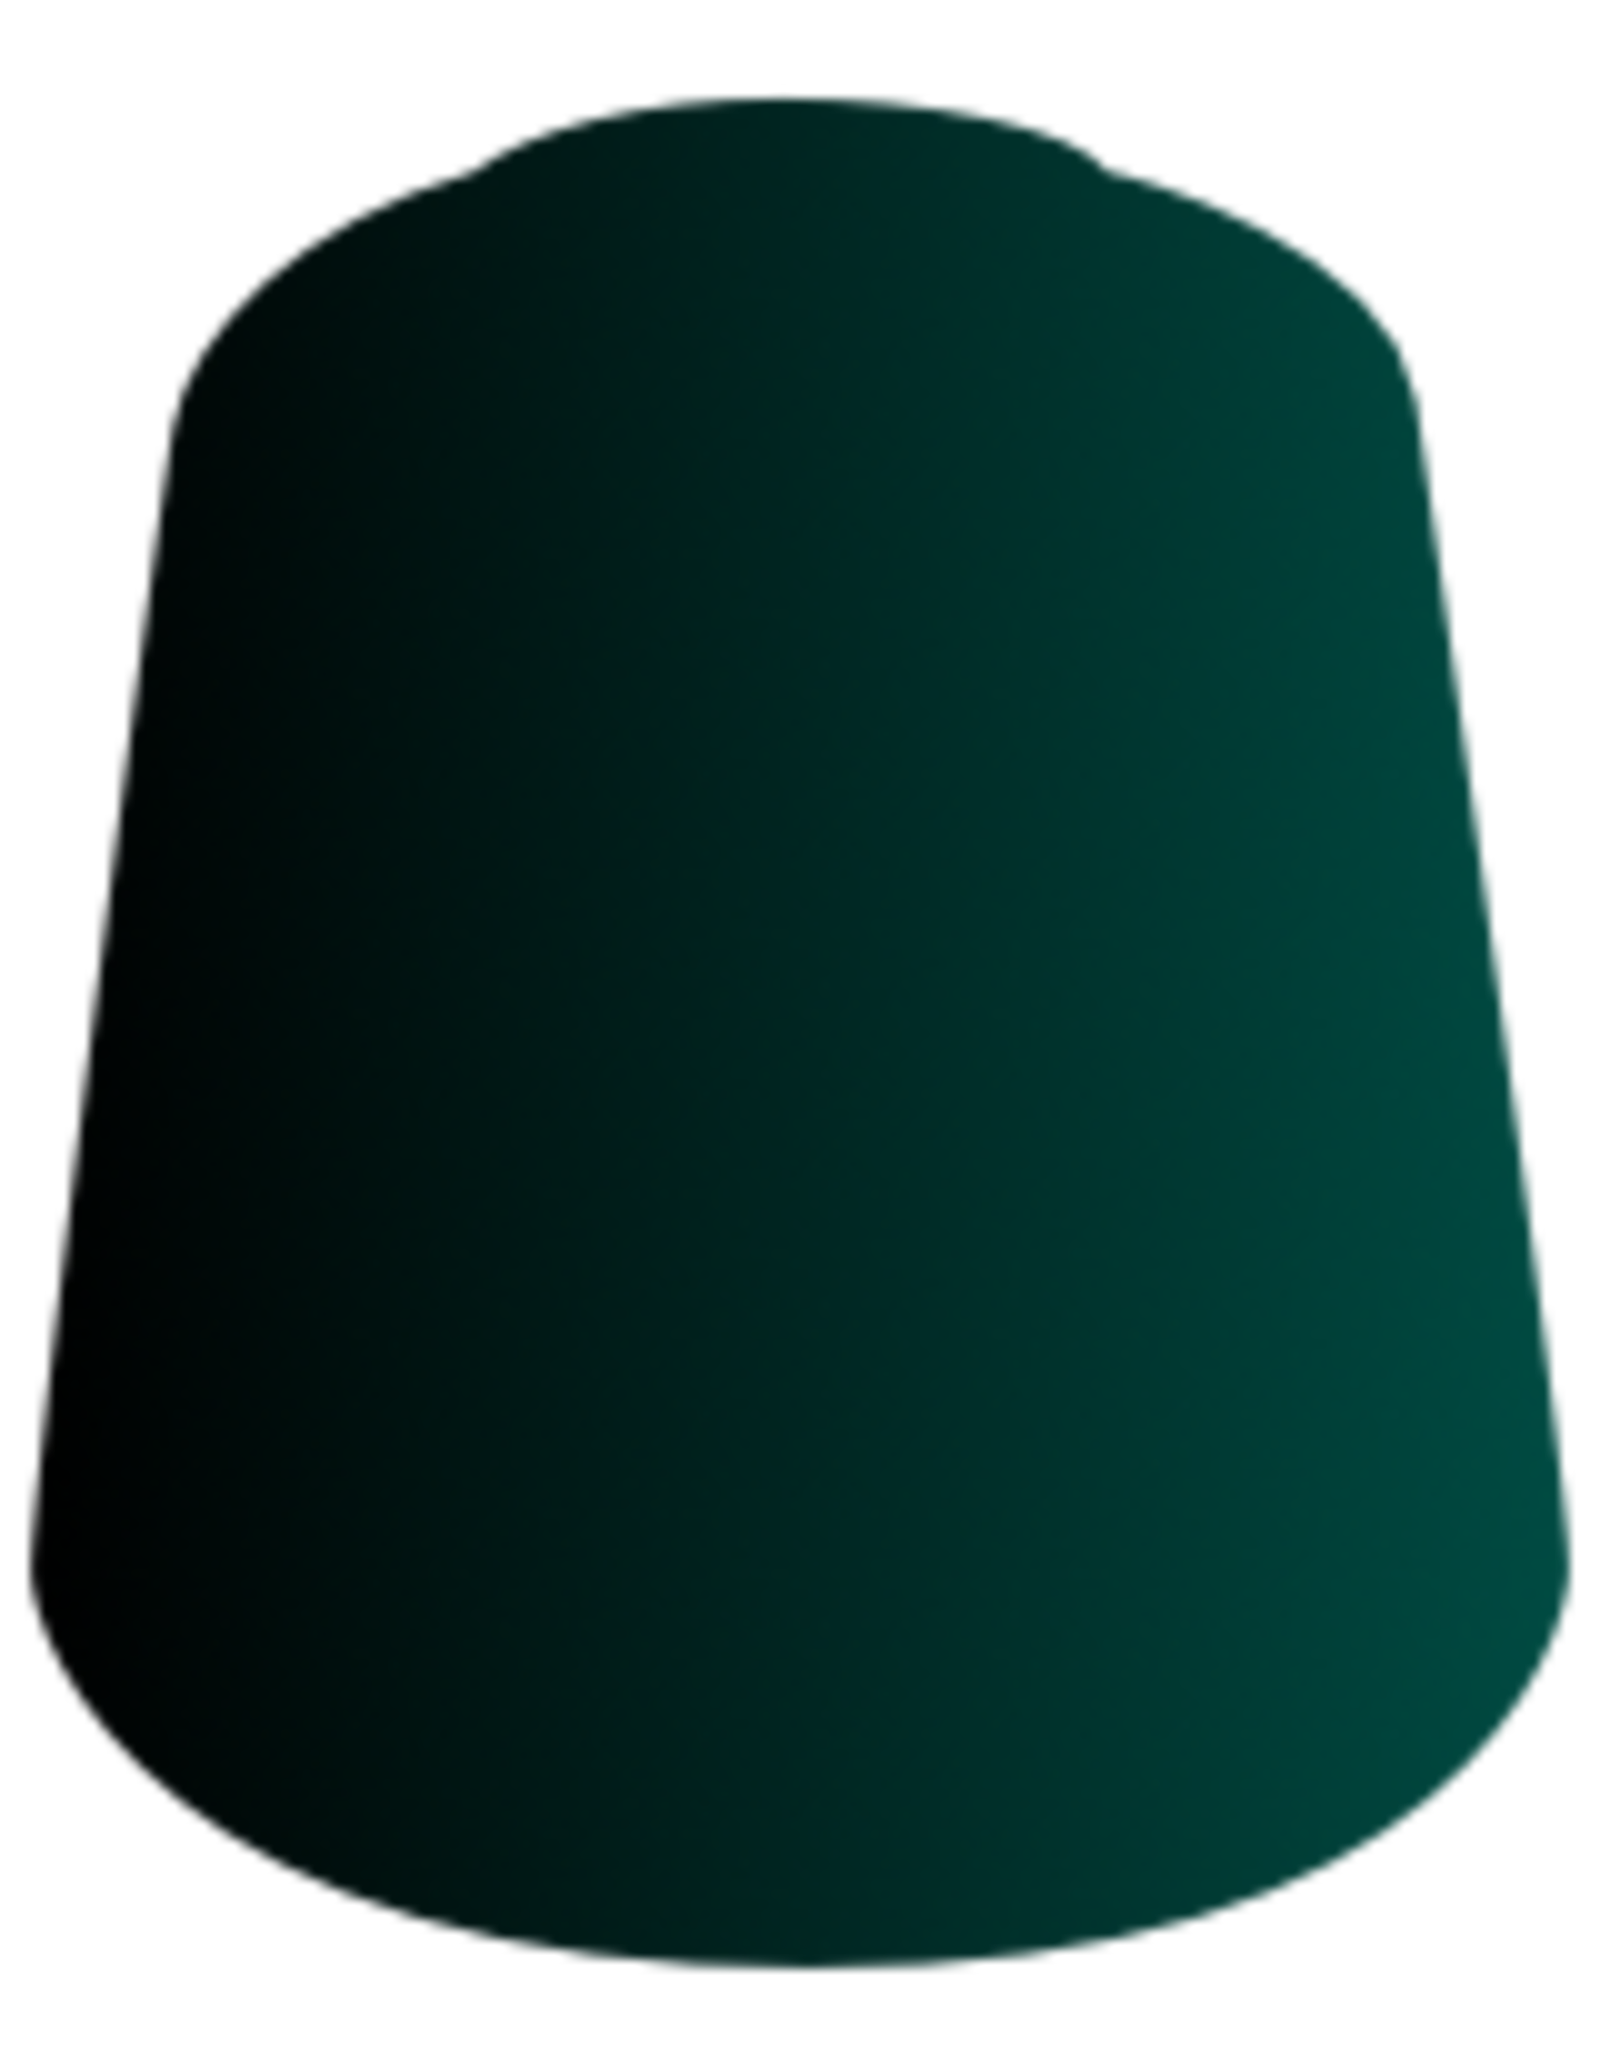 Citadel Paint: Contrast - Dark Angels Green